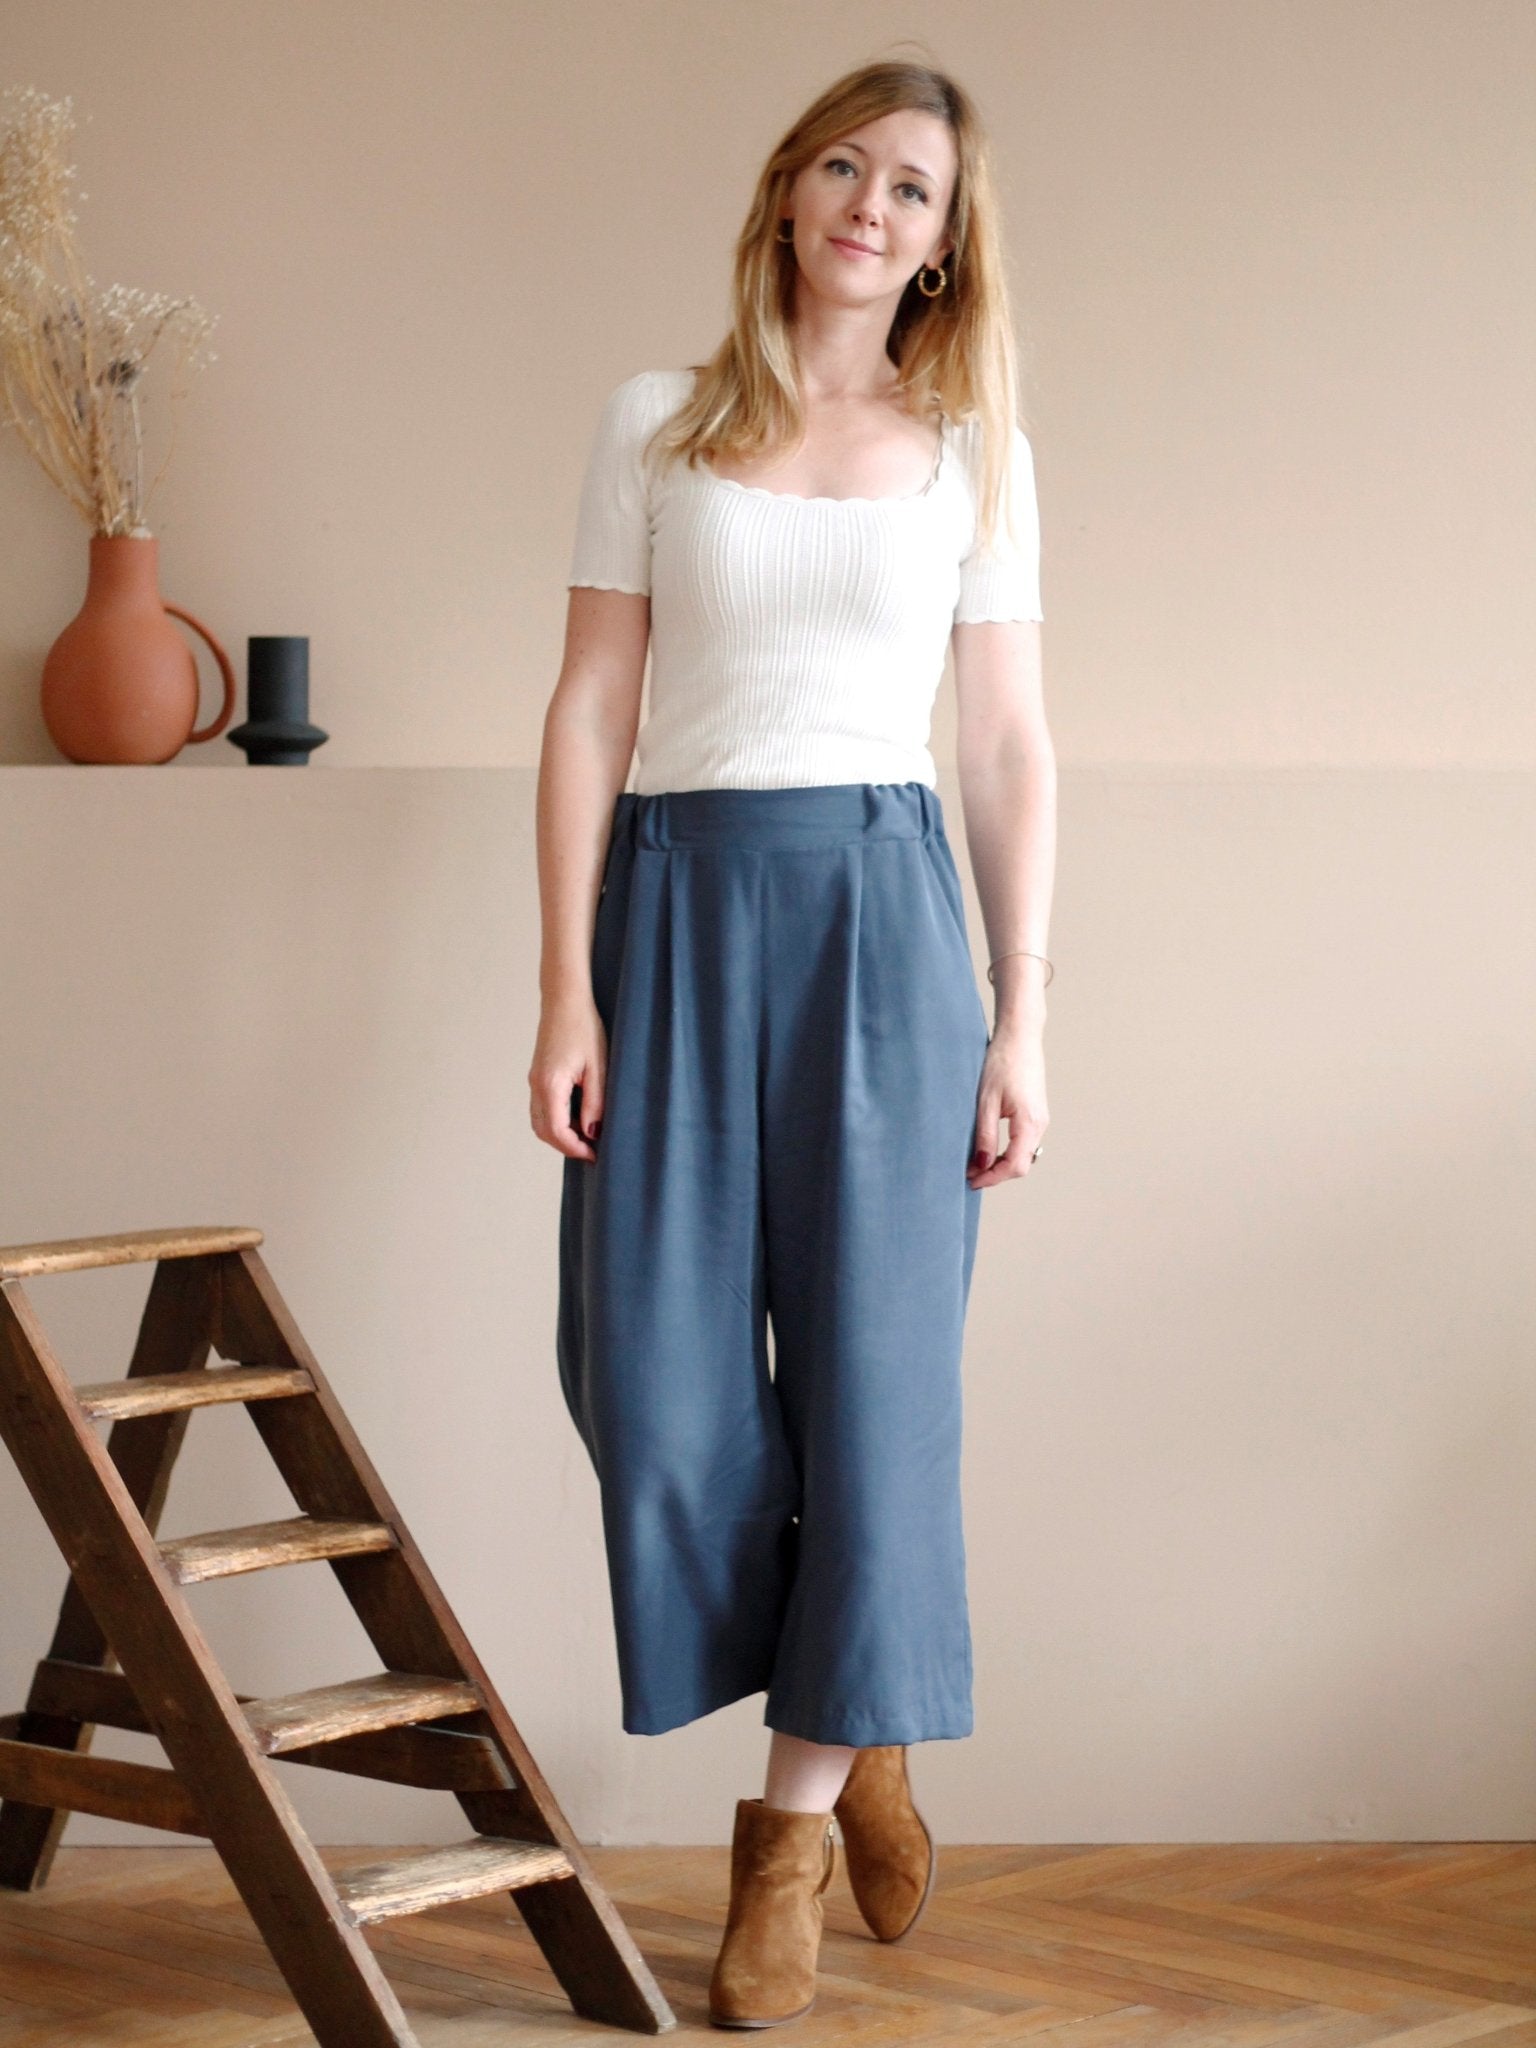 Lison Pants - pattern Couture PDF or paper - Joli Lab